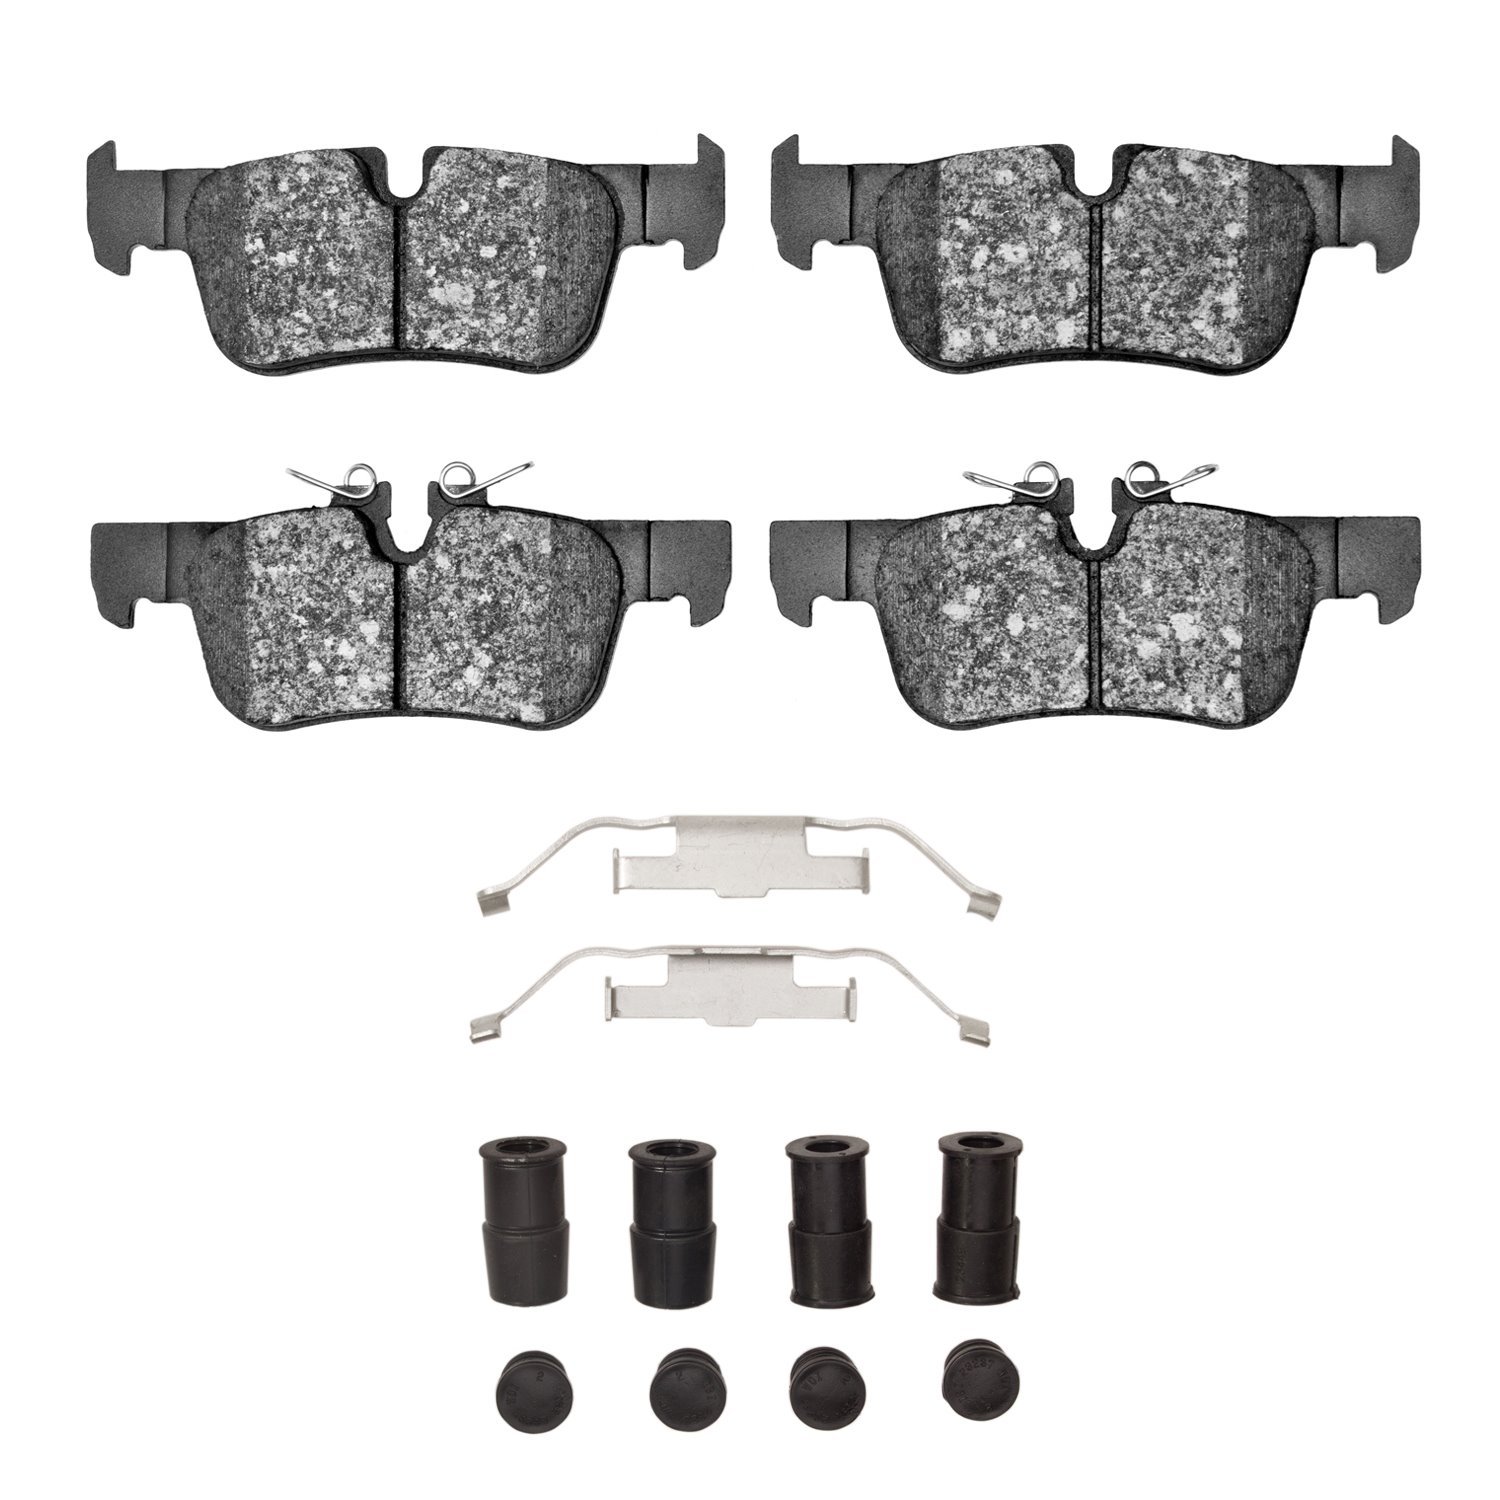 1310-1762-01 3000-Series Ceramic Brake Pads & Hardware Kit, Fits Select Multiple Makes/Models, Position: Rear